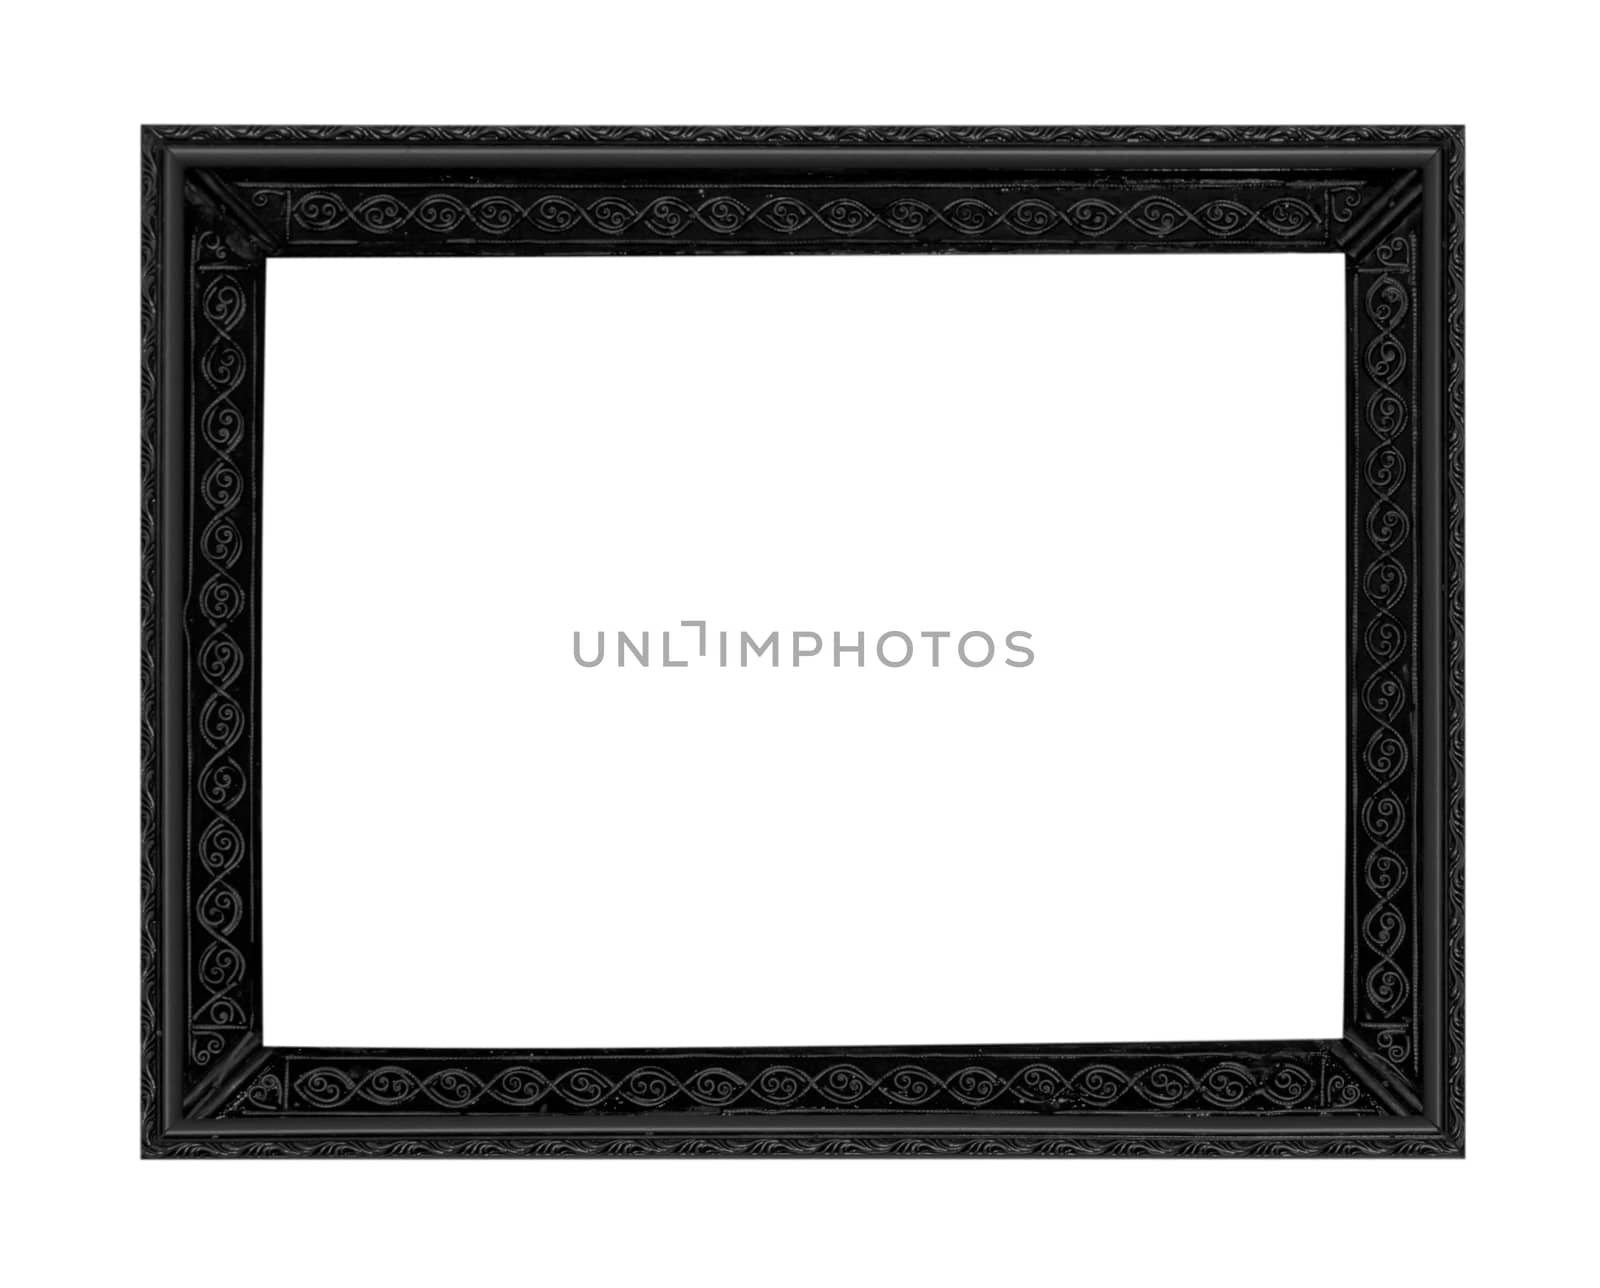 Antique Black Frame Isolated On White Background